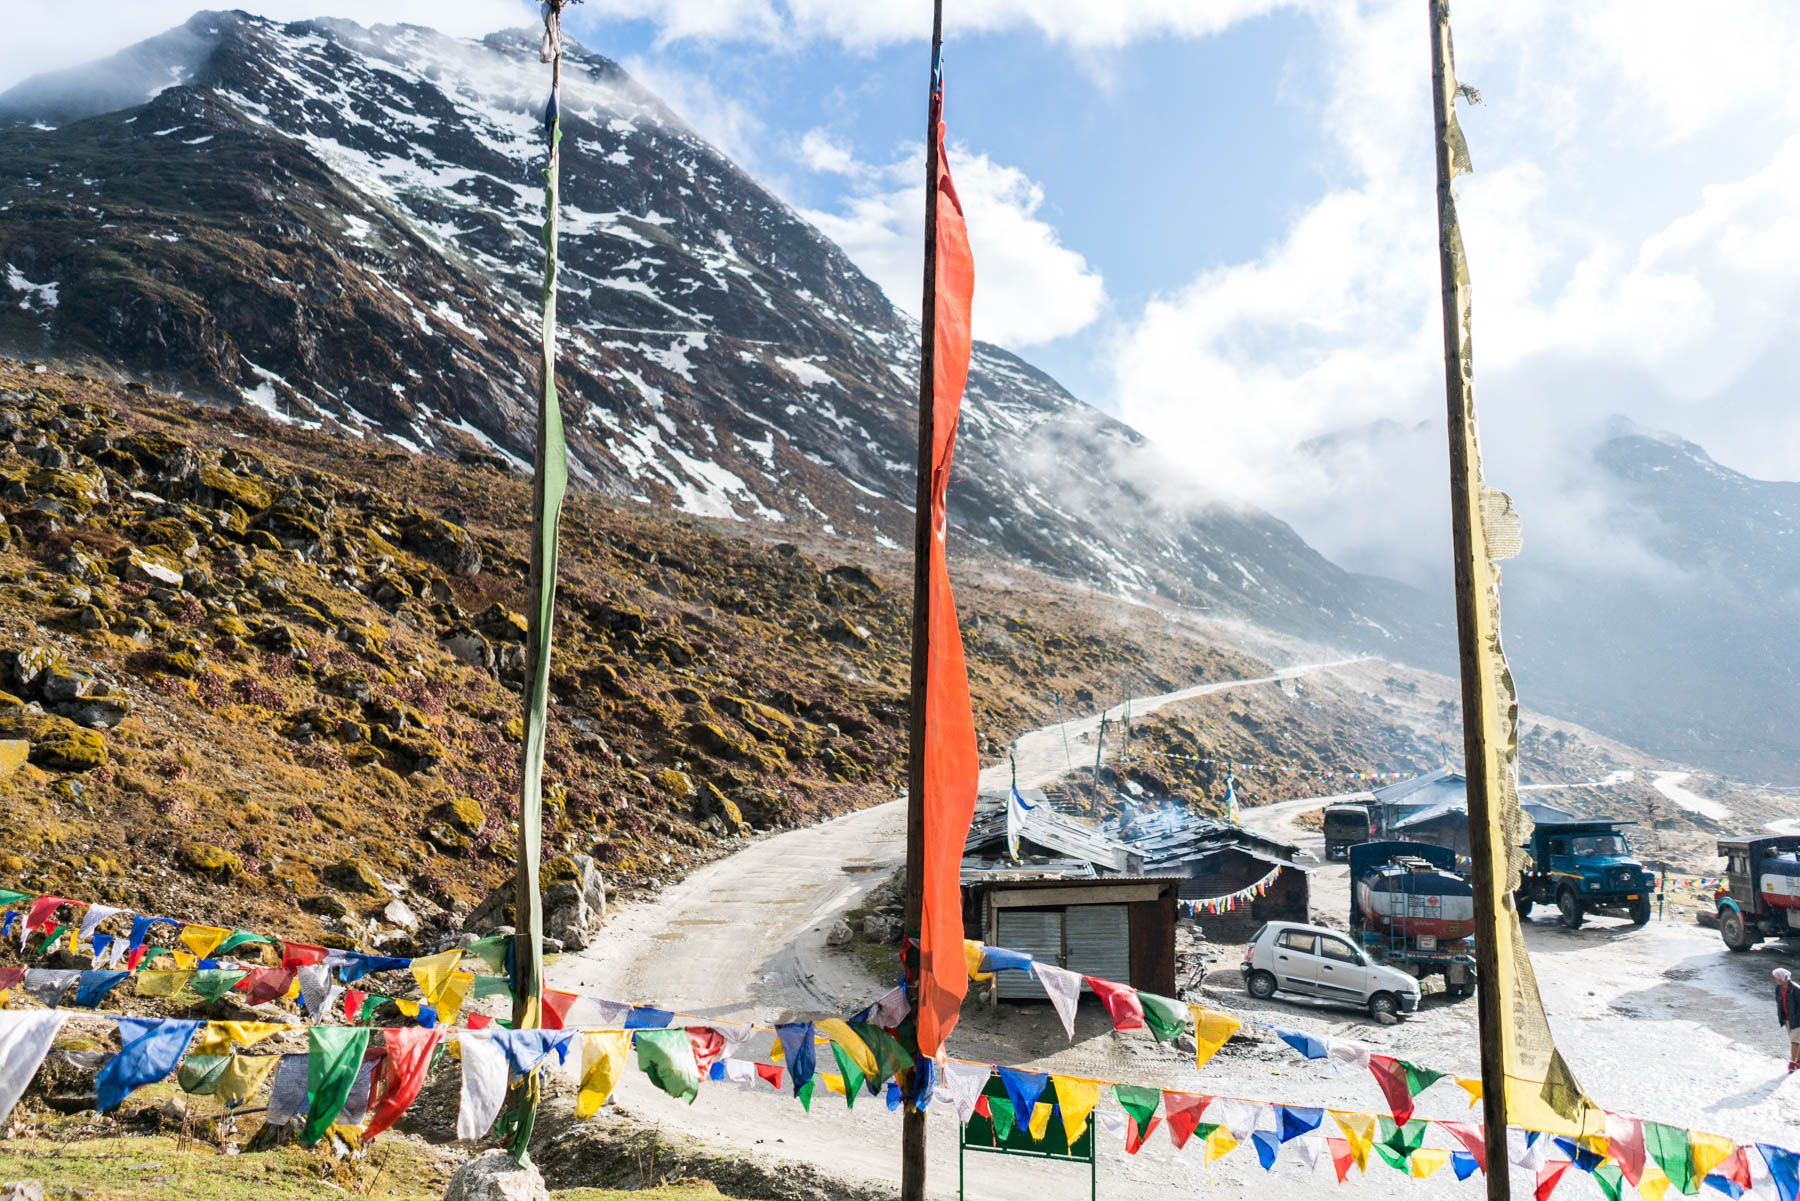 Backpacking in Arunachal Pradesh travel guide - Road to Tawang near Tibetan border - Lost With Purpose